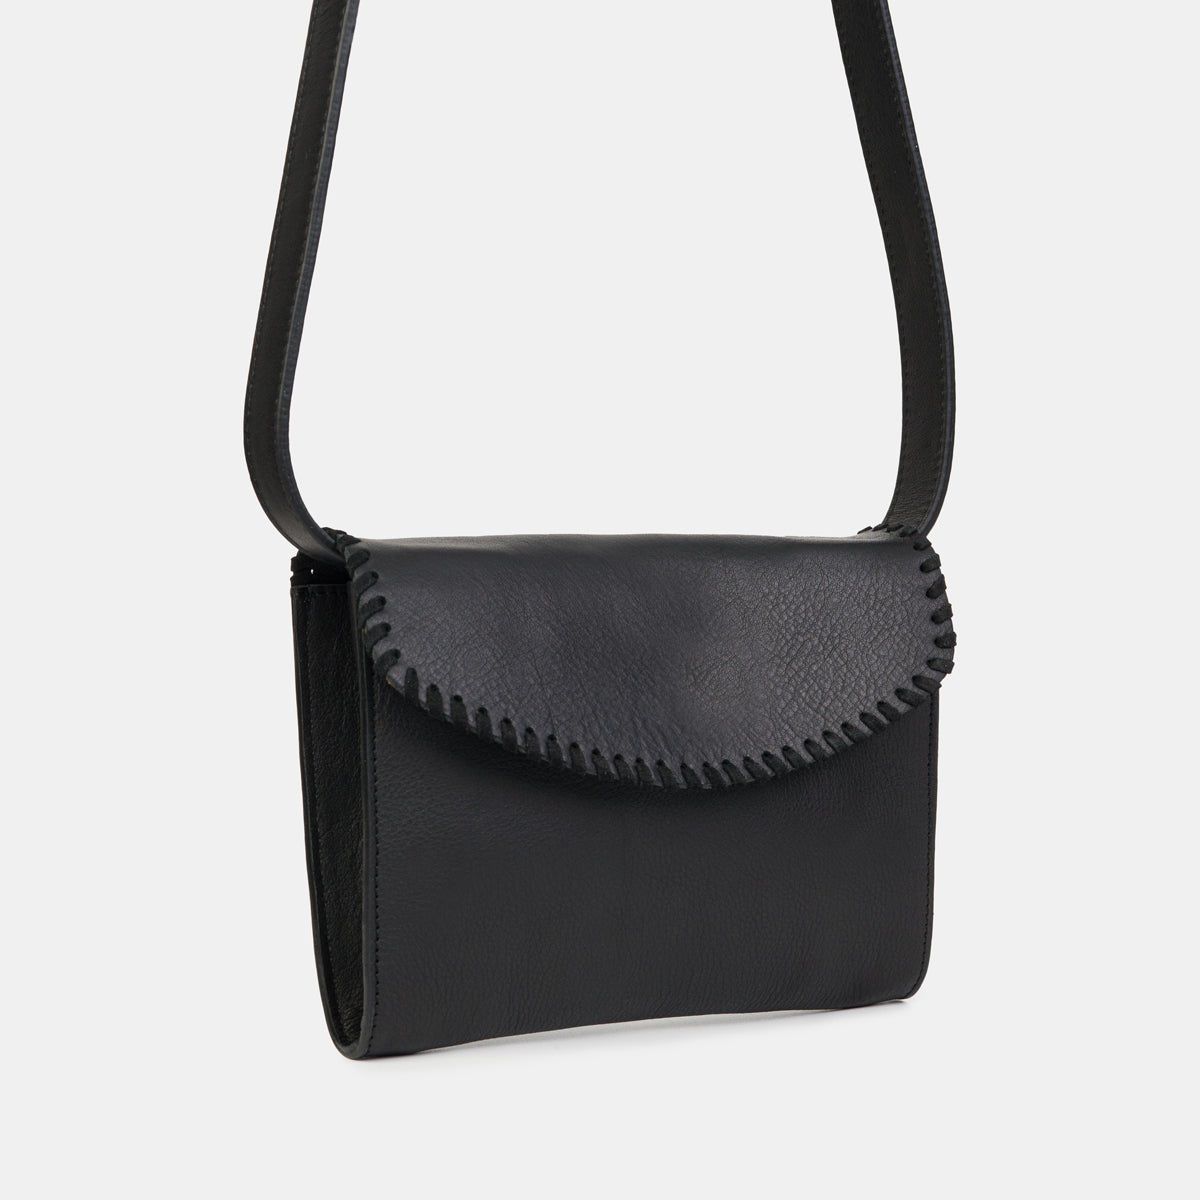 Sole Shoulder Bag | New -Nappa Black + Suede Black- ann kurz